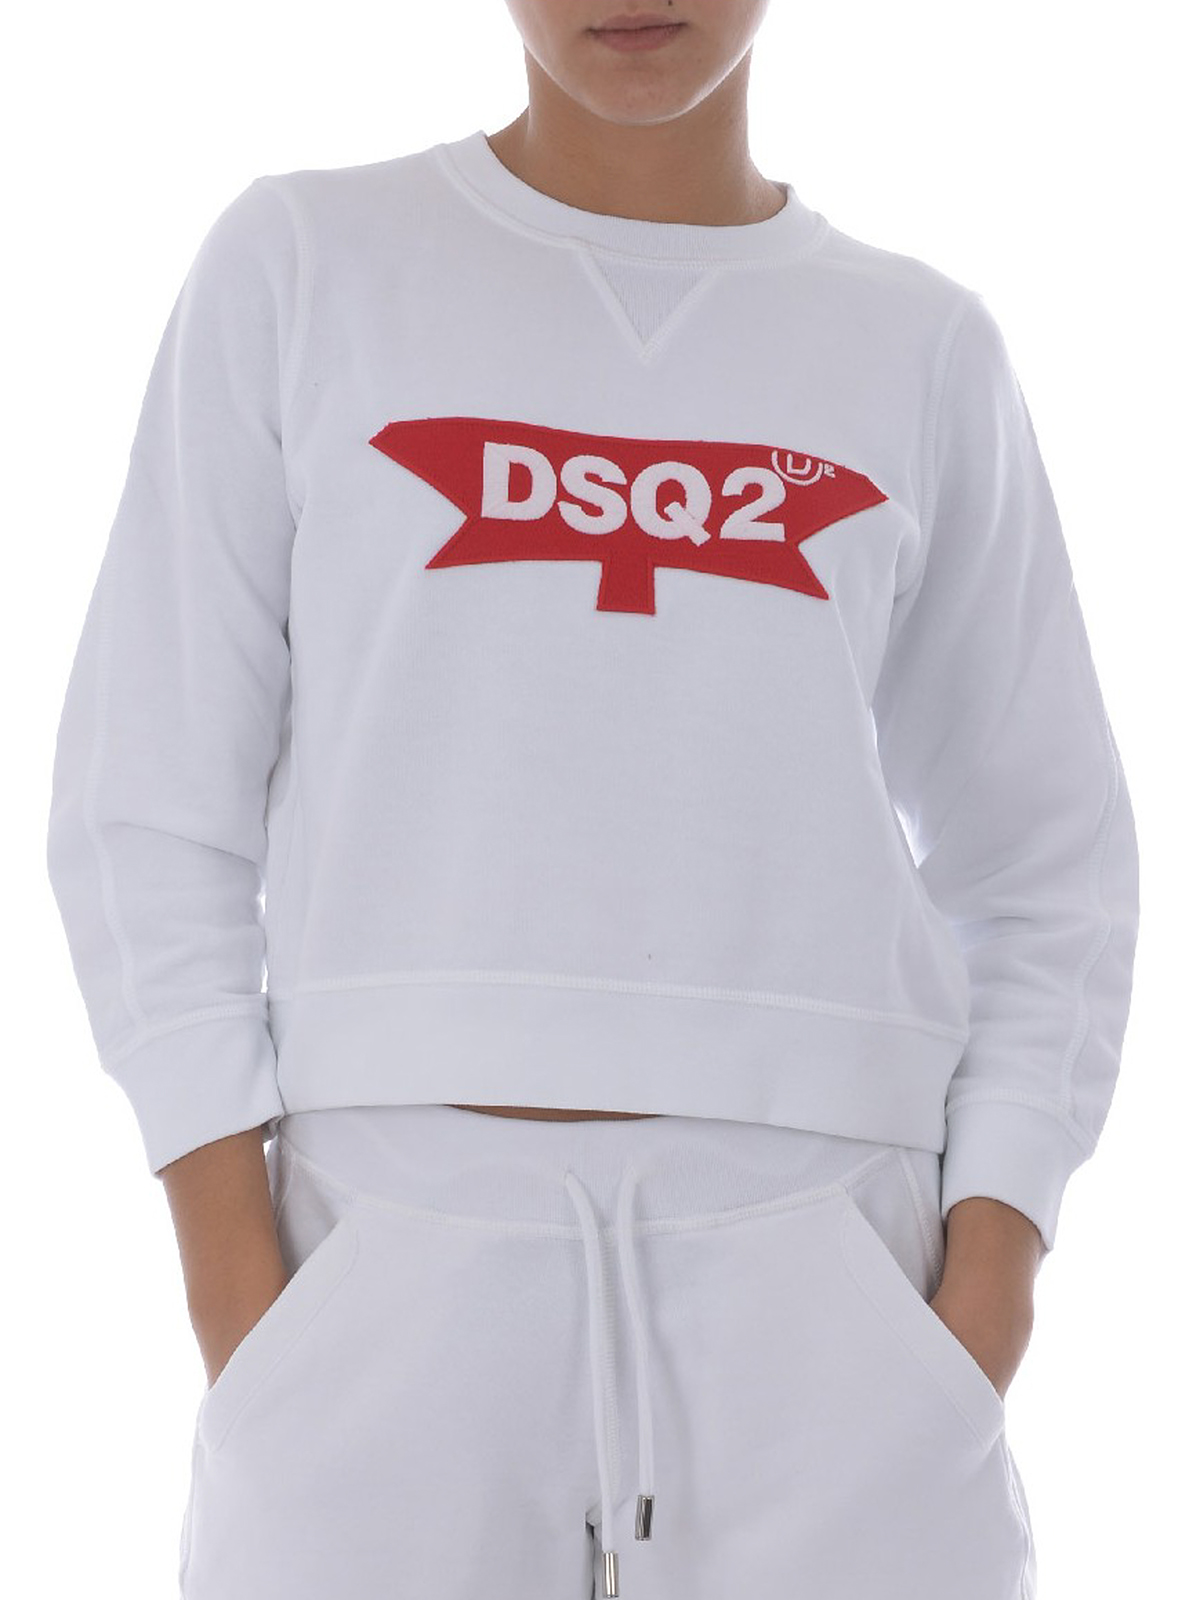 DSQ2 white cotton sweatshirt 